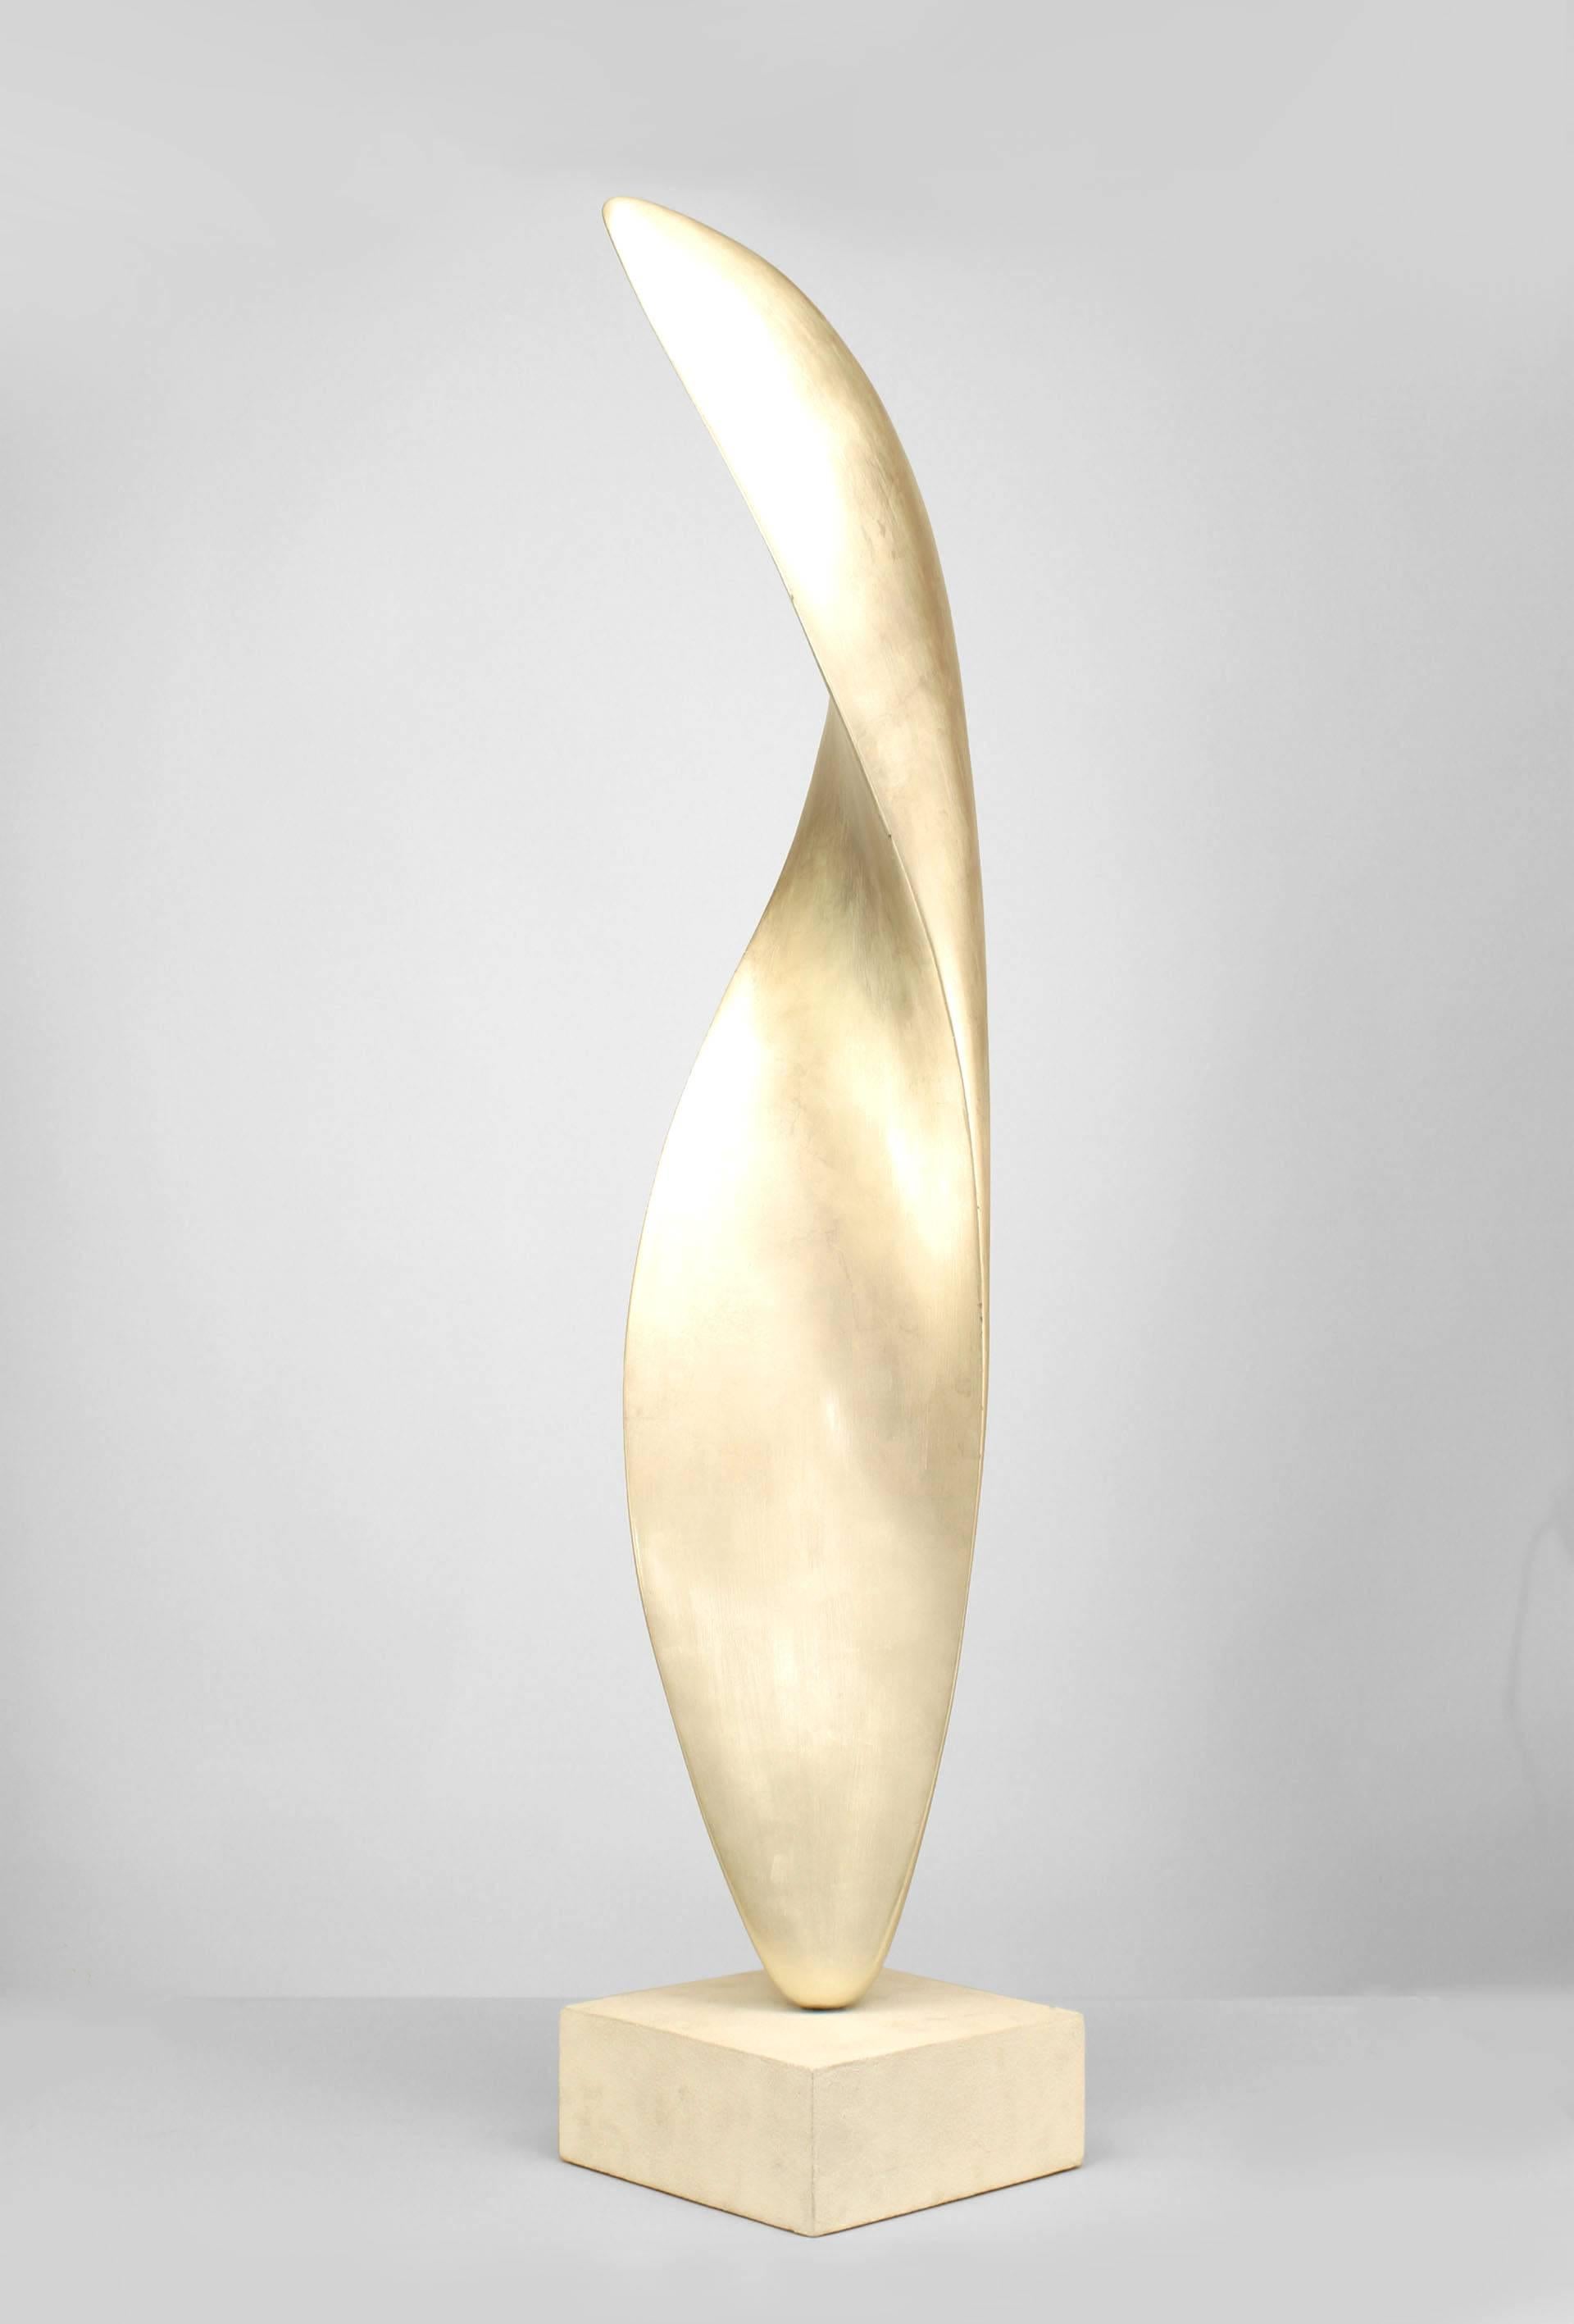 Post-Modern American Post-War Silver Leaf Resin Sculpture For Sale